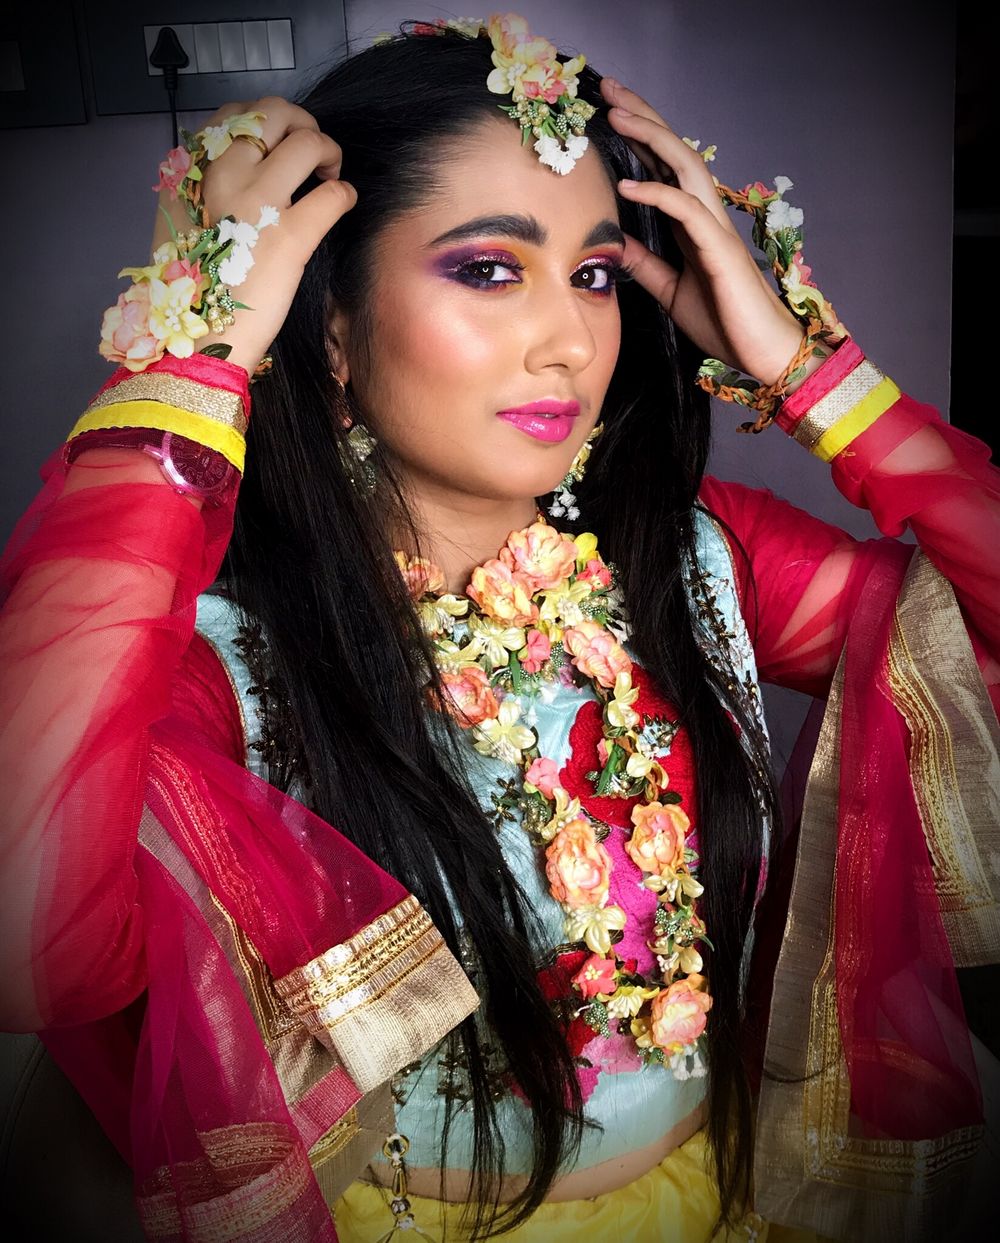 Photo From Mehndi/Sangeet MakeUp  - By The Glamourra by Seemi Sisosdiya